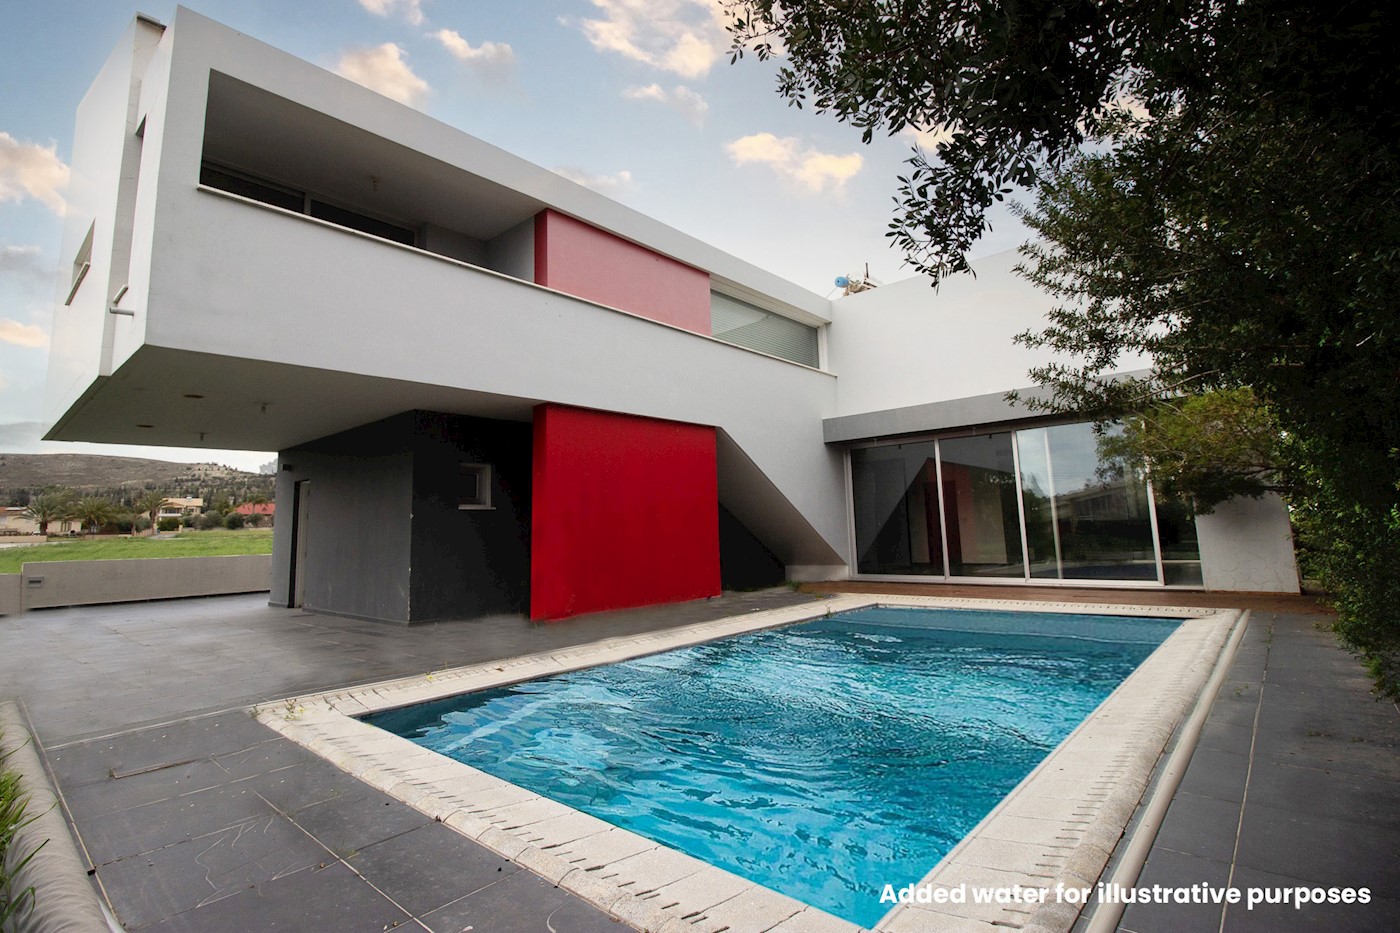 Four-bedroom Villa with swimming pool in Alambra, Nicosia 1/20